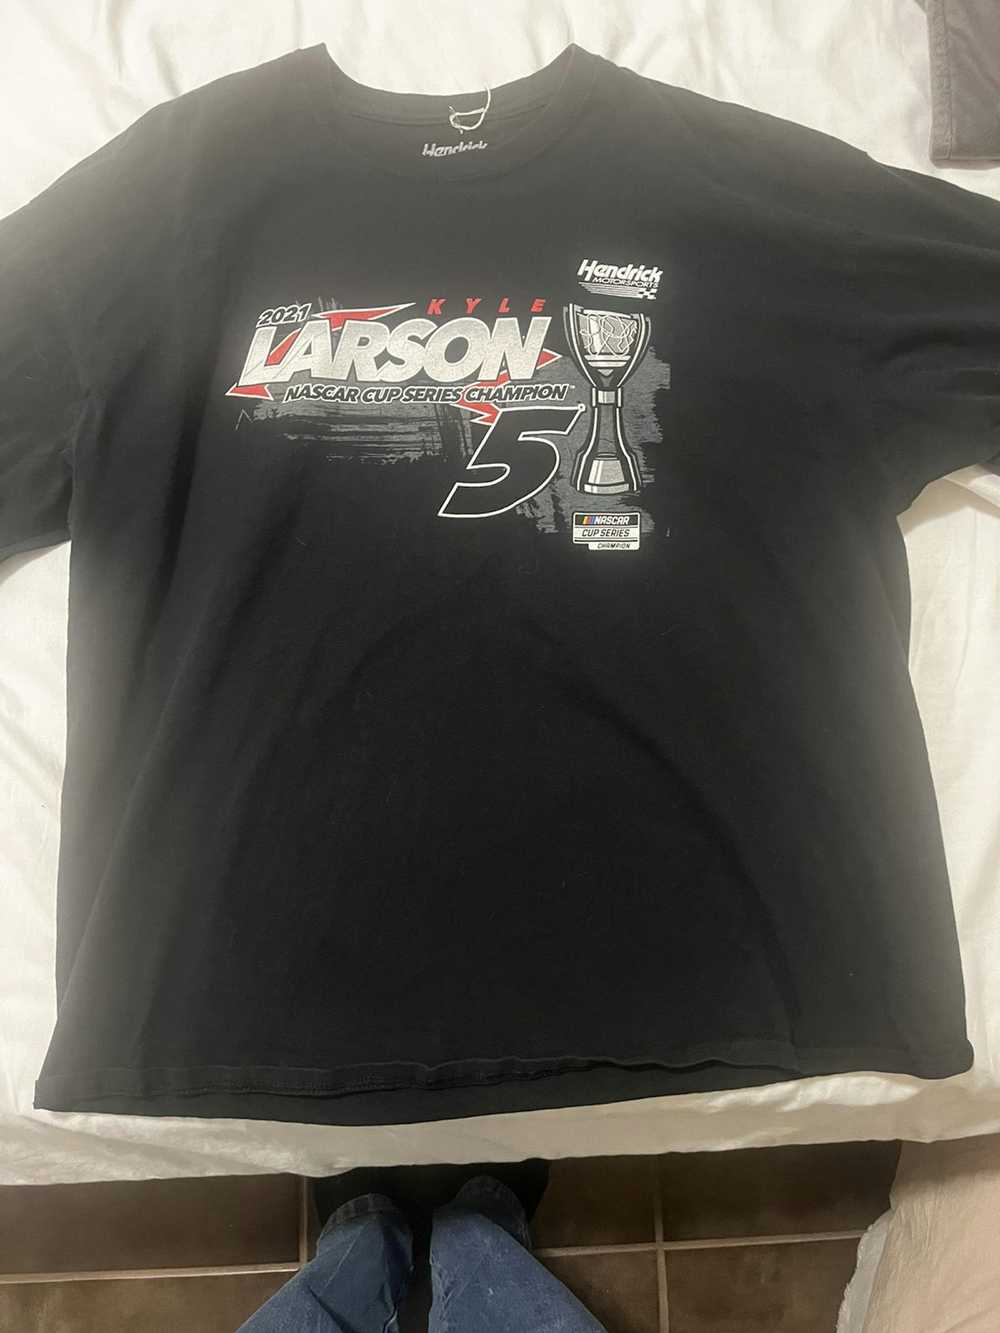 NASCAR NASCAR Kyle Larson Championship t-shirt - image 3